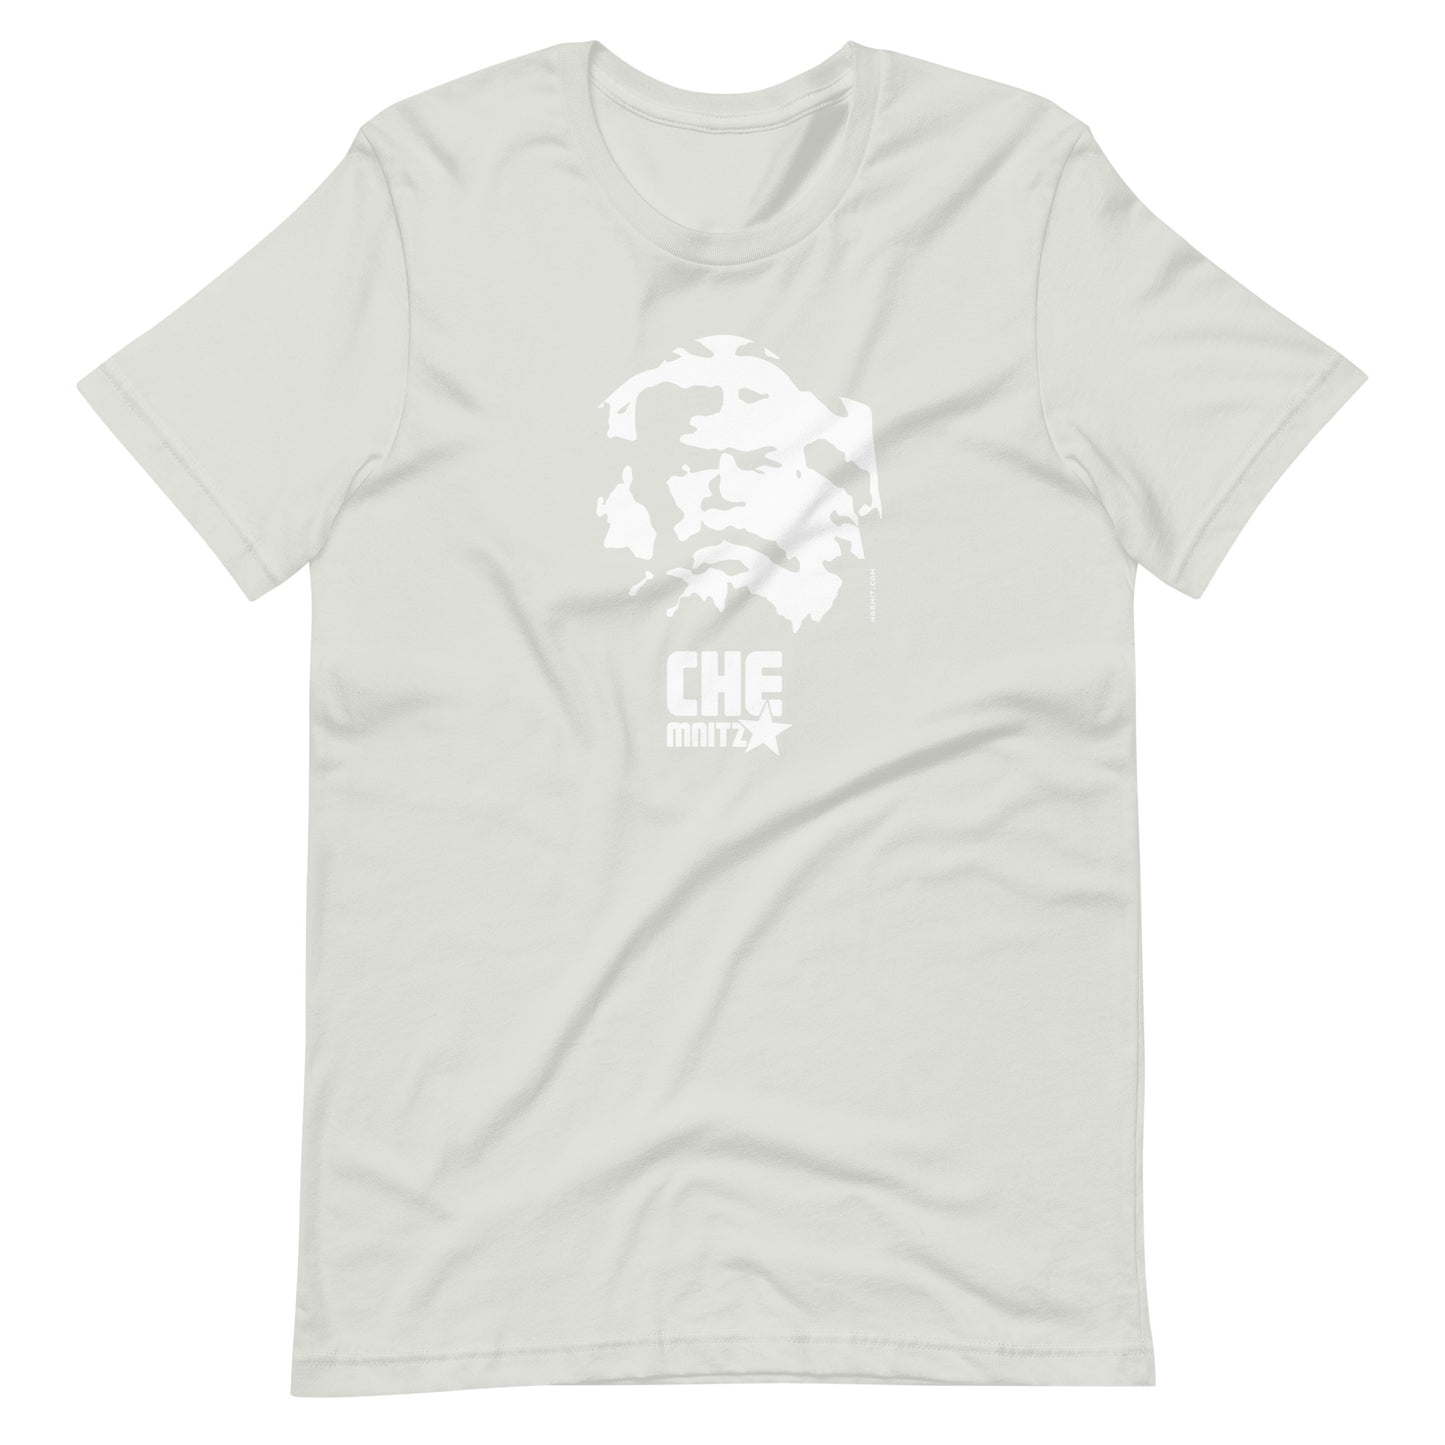 T-Shirt Karl Marx, Che